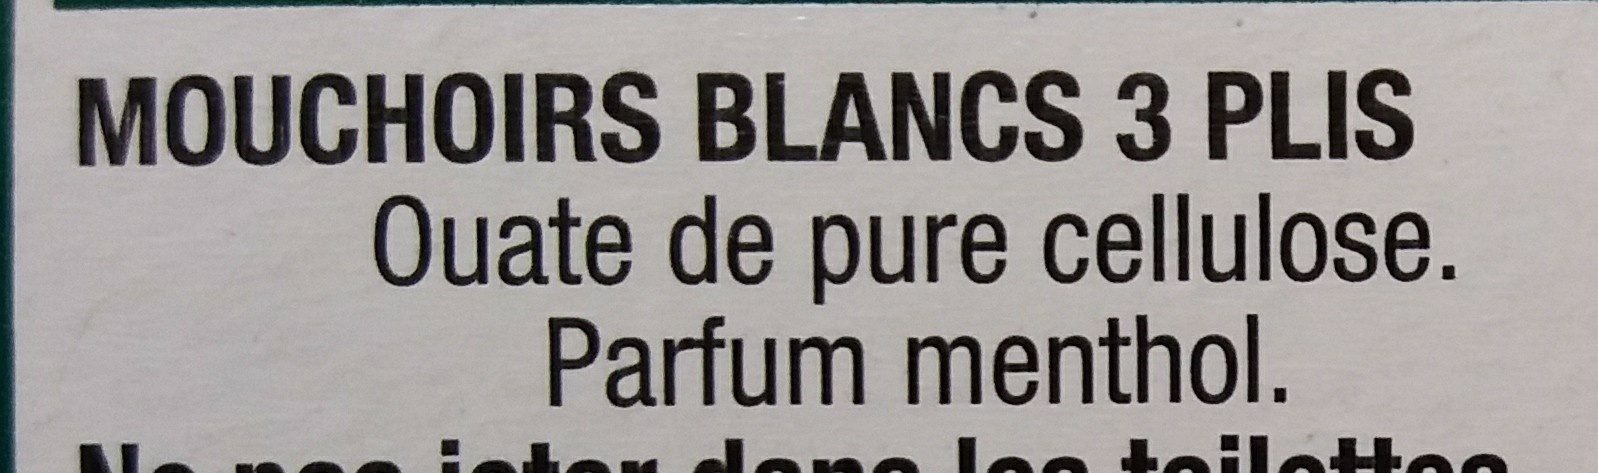 Mouchoirs Menthol Blancs - Ingredientes - fr